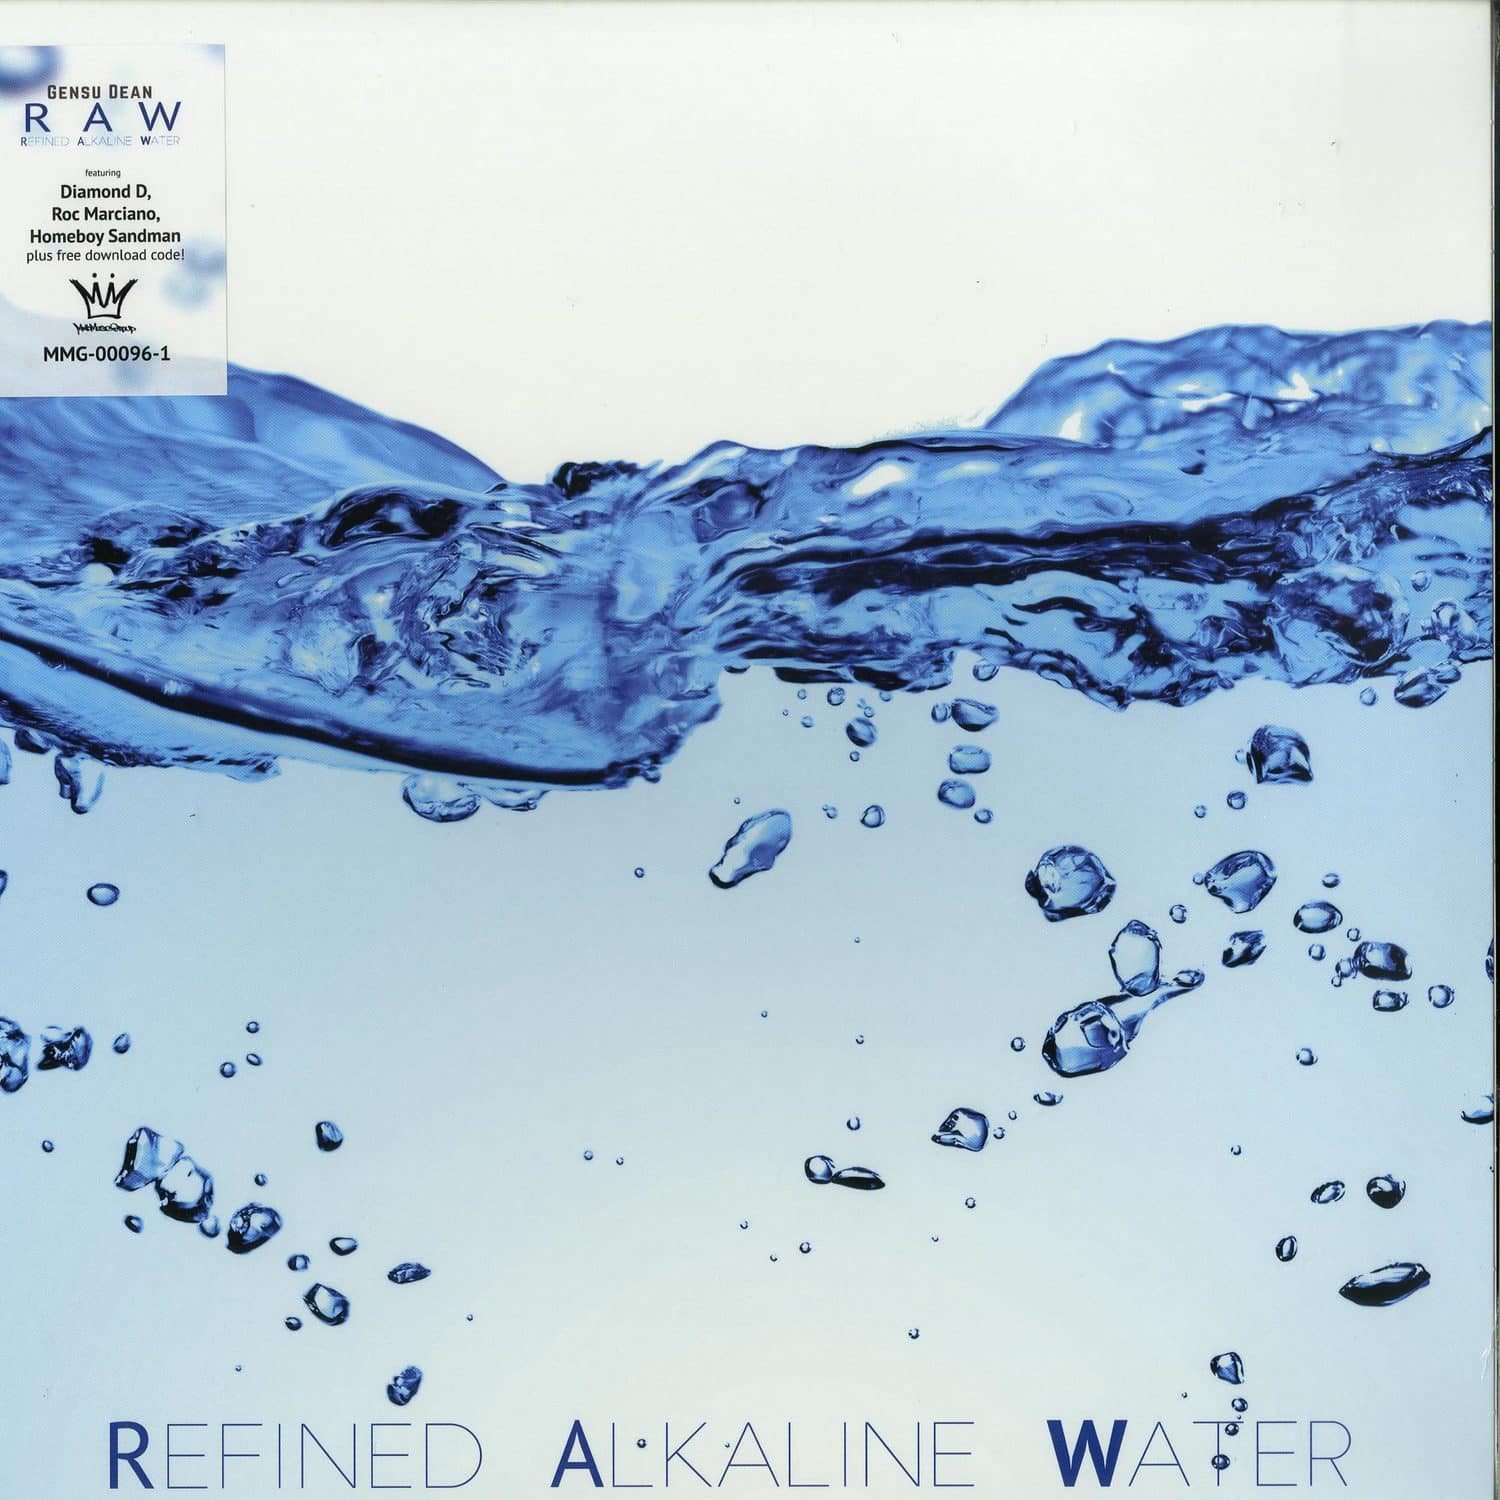 Gensu Dean - RAW - REFINED ALKALINE WATER 